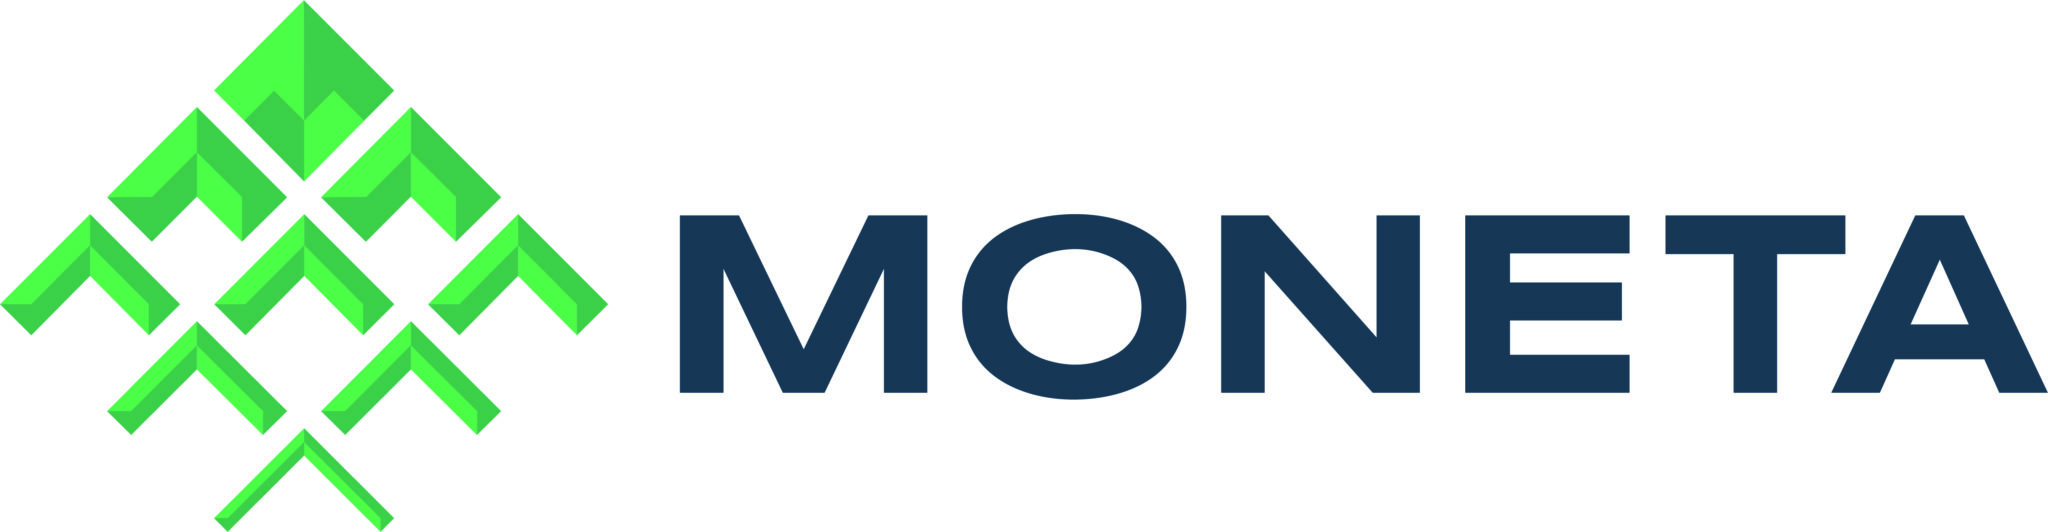 Moneta Logo Horizontal